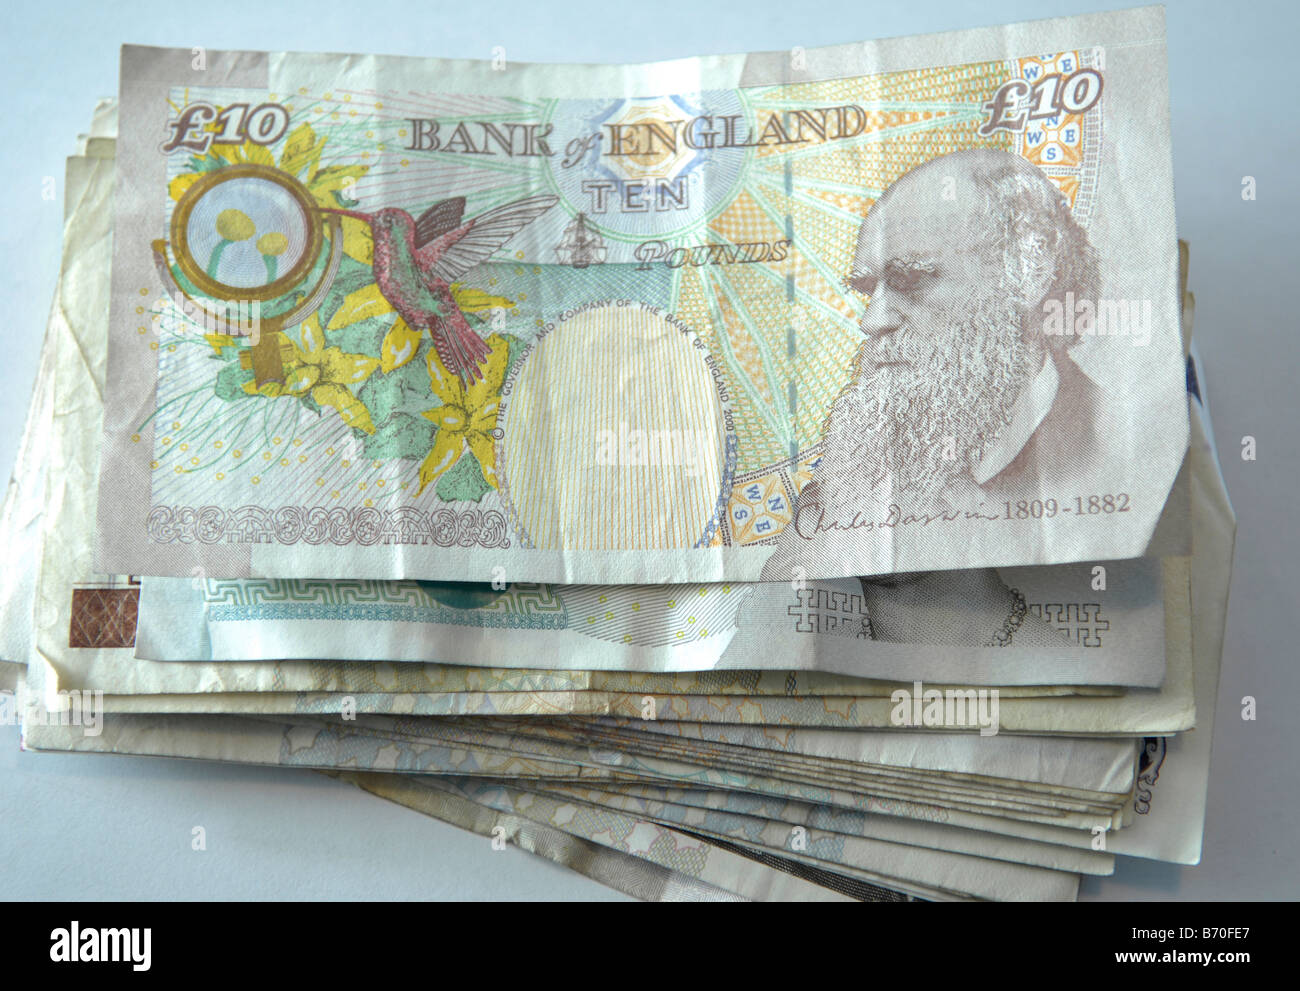 bank of england 10 pound notes Stock Photo